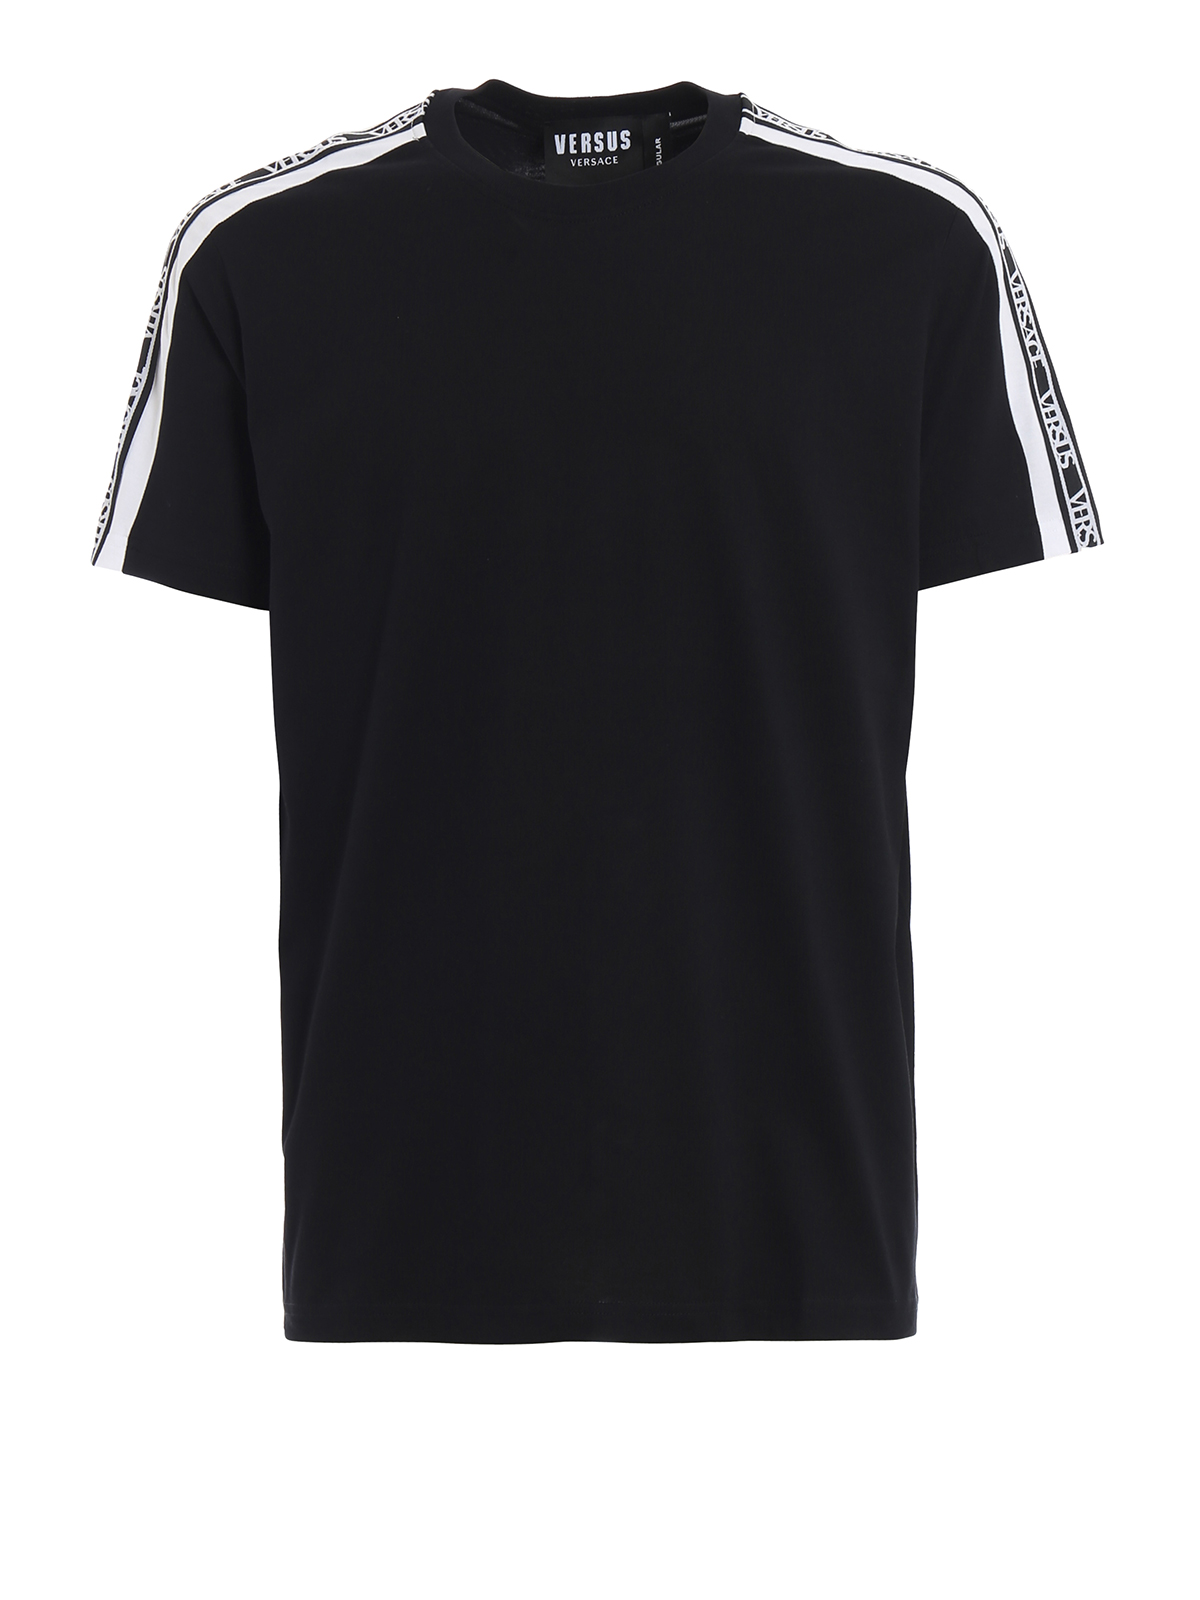 Versus Versace - Versus Logo Tape black T-shirt - t-shirts ...